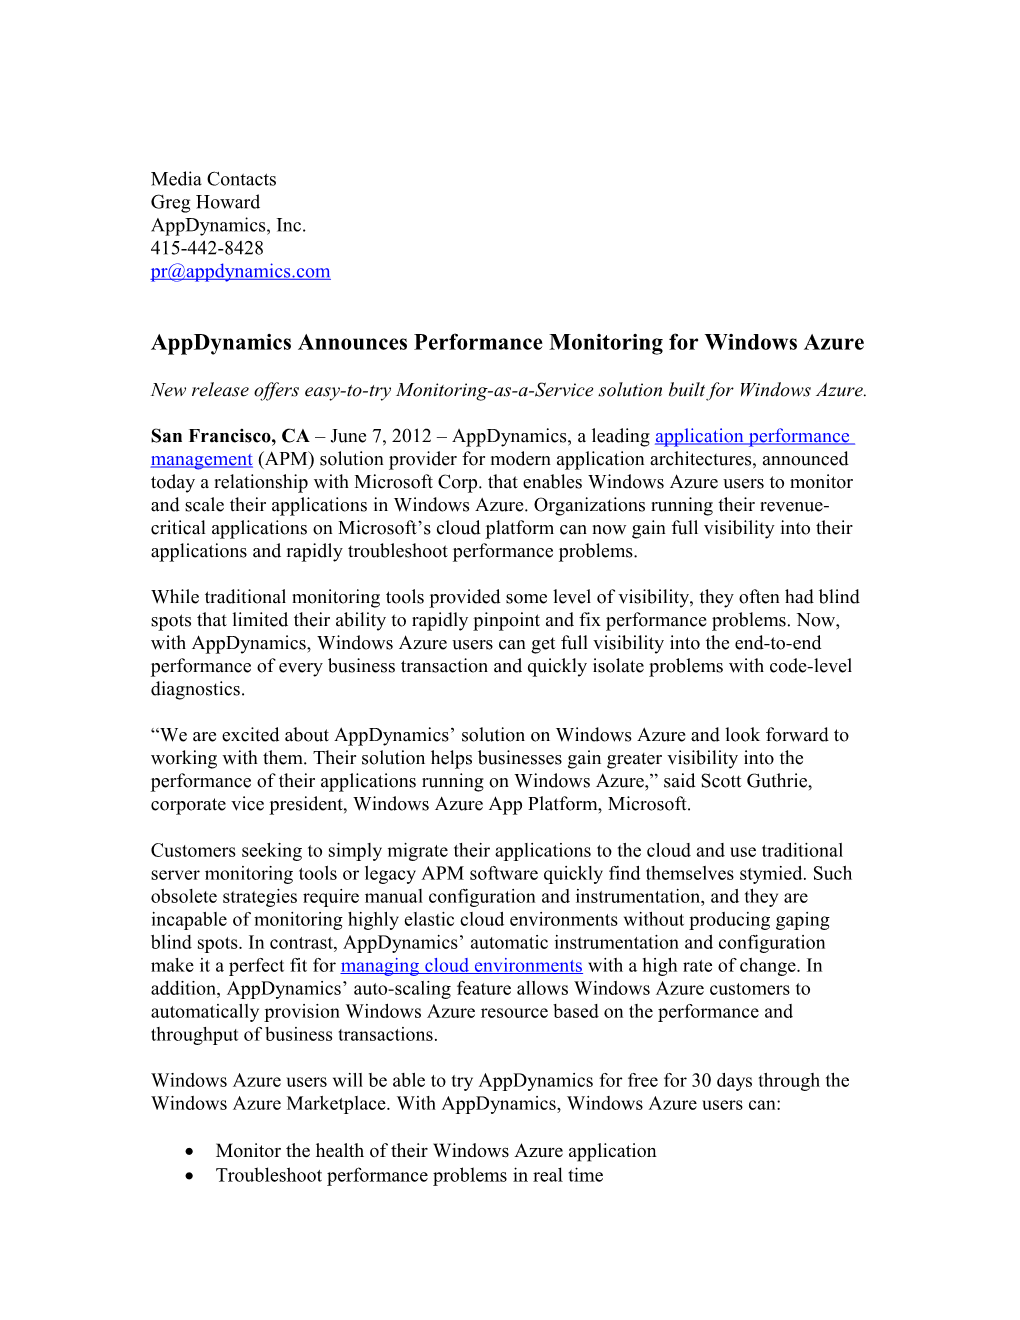 Appdynamics Announces Performancemonitoring for Windows Azure